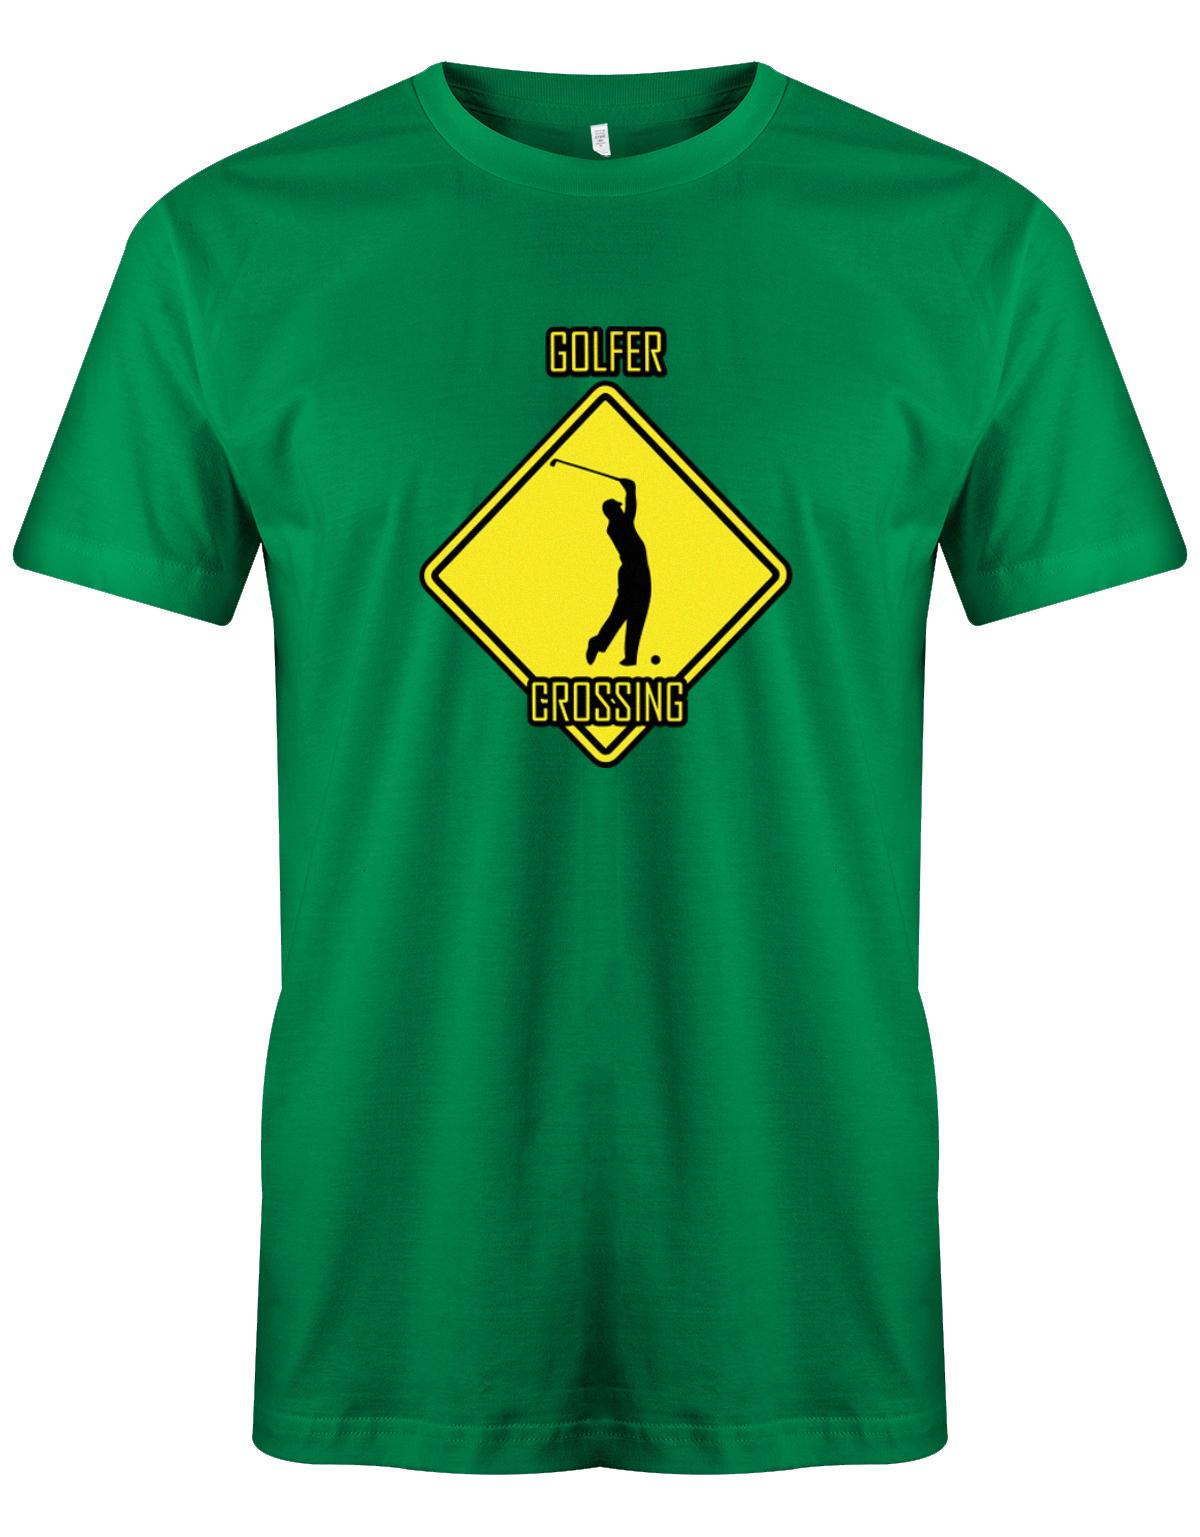 Golfer-Crossing-Herren-Shirt-Gruen